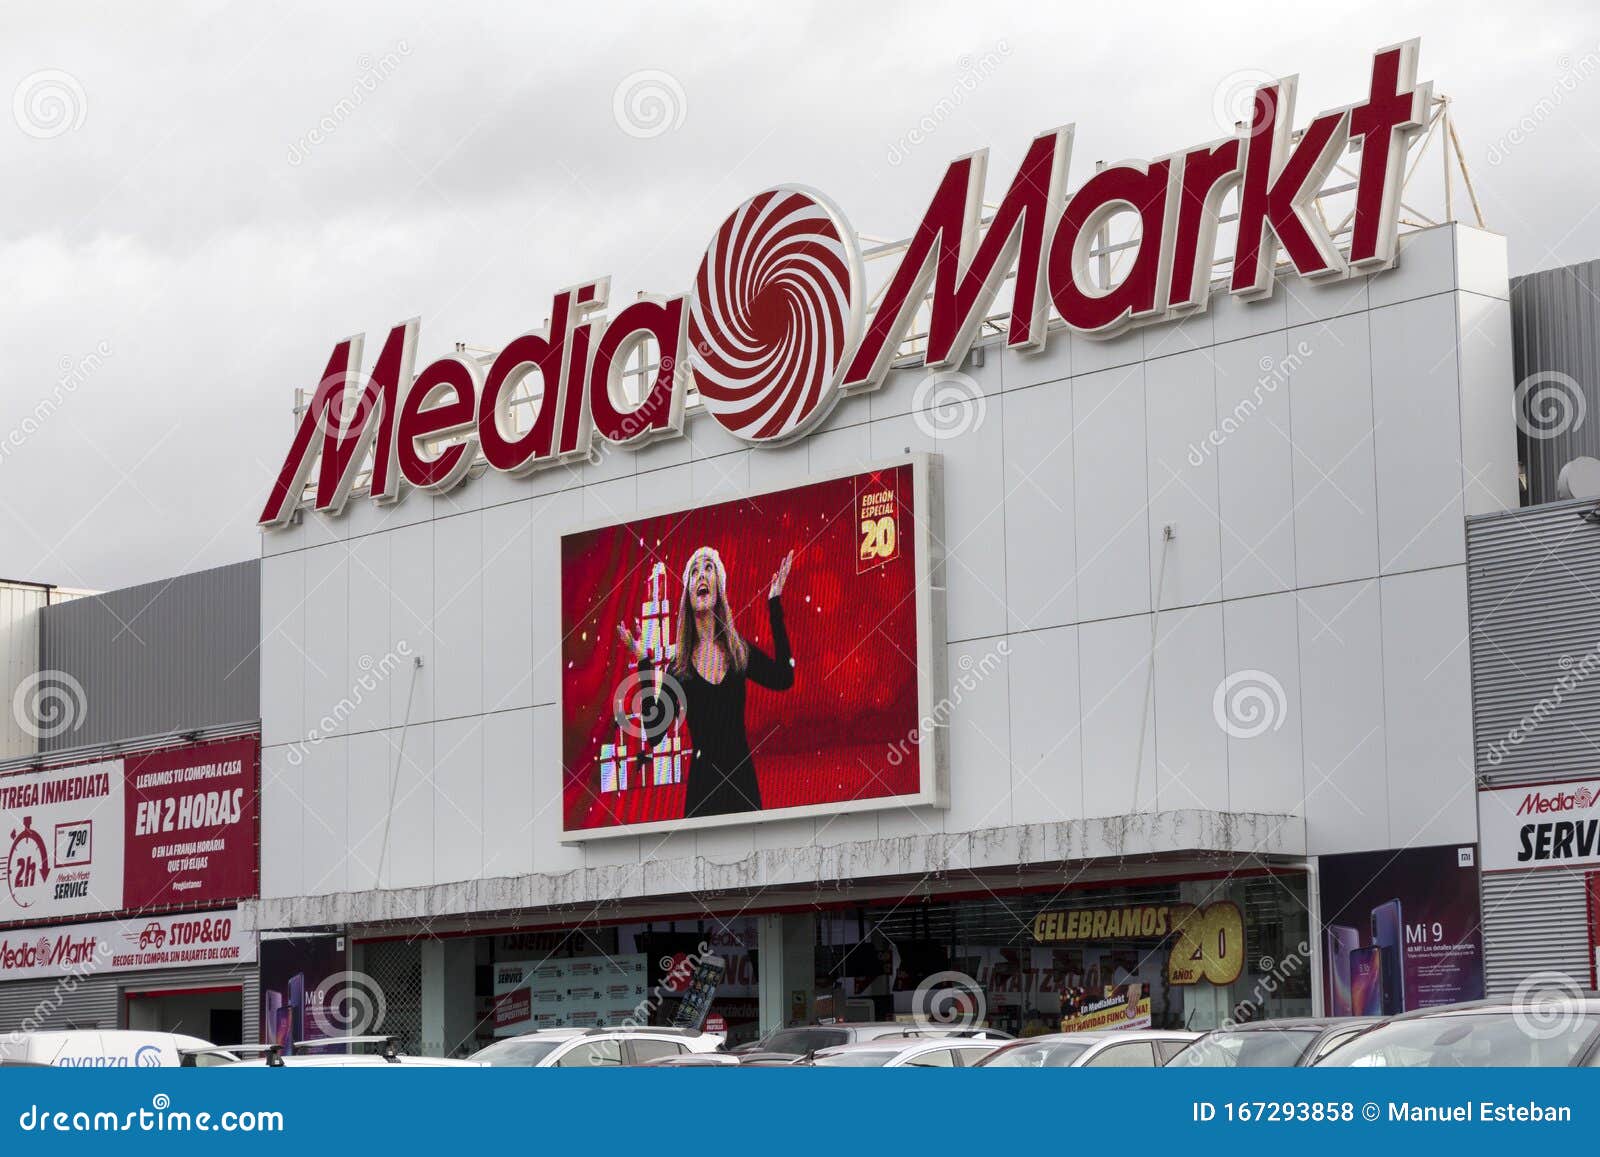 Media Markt on Media Markt Store Editorial Stock Photo Image of 167293858